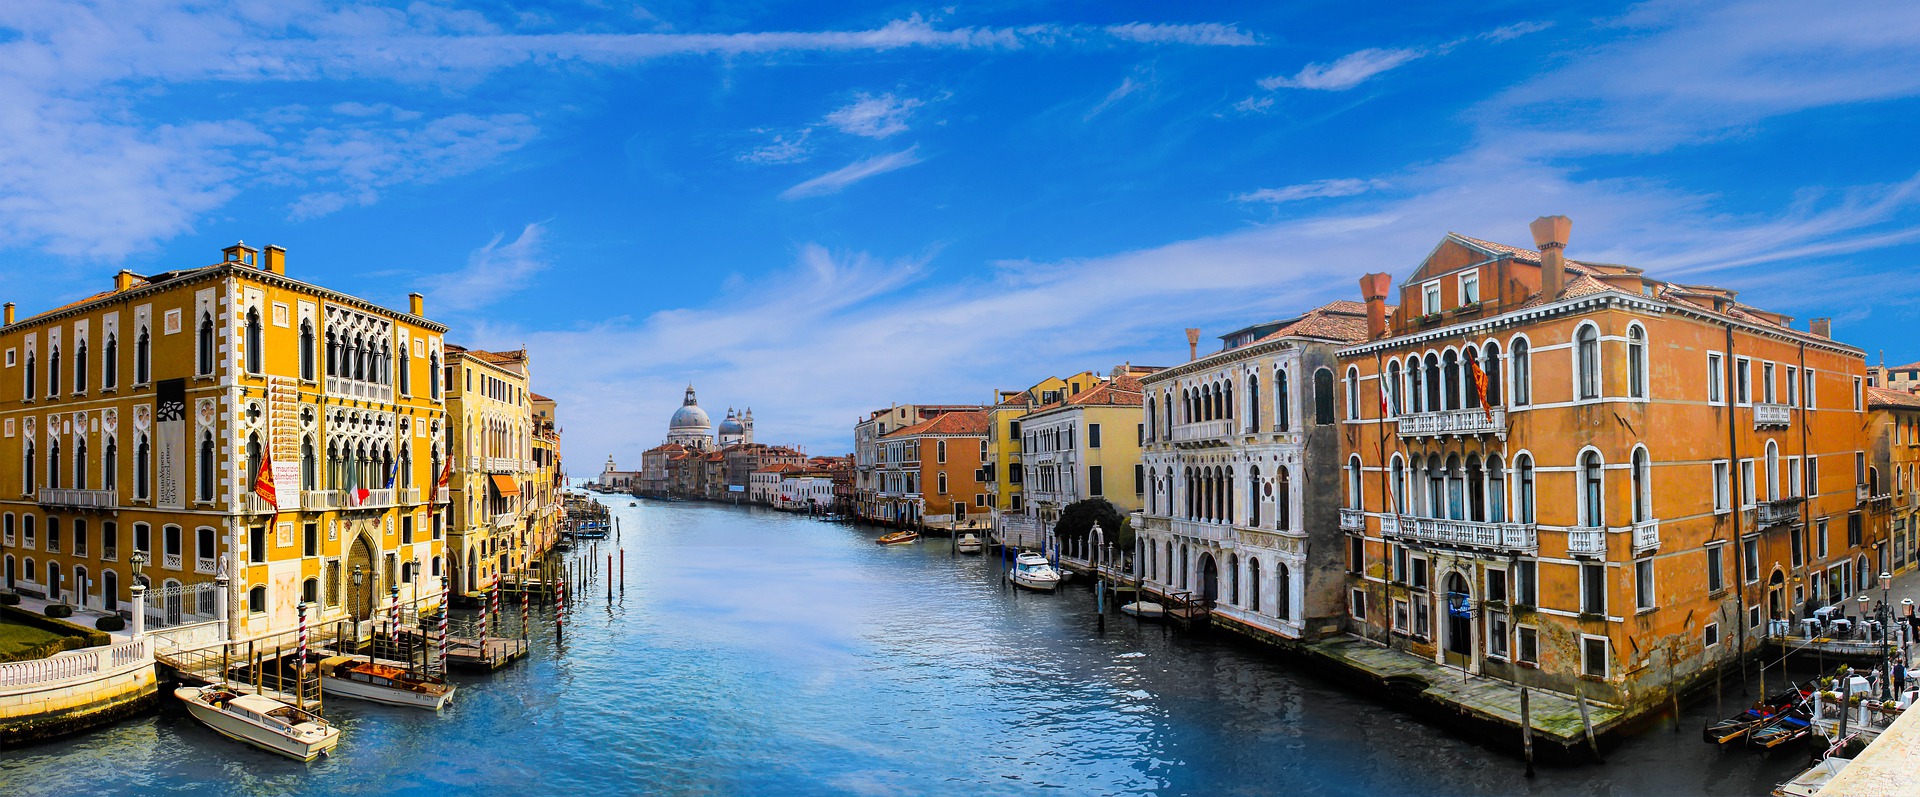 Venice11.jpg